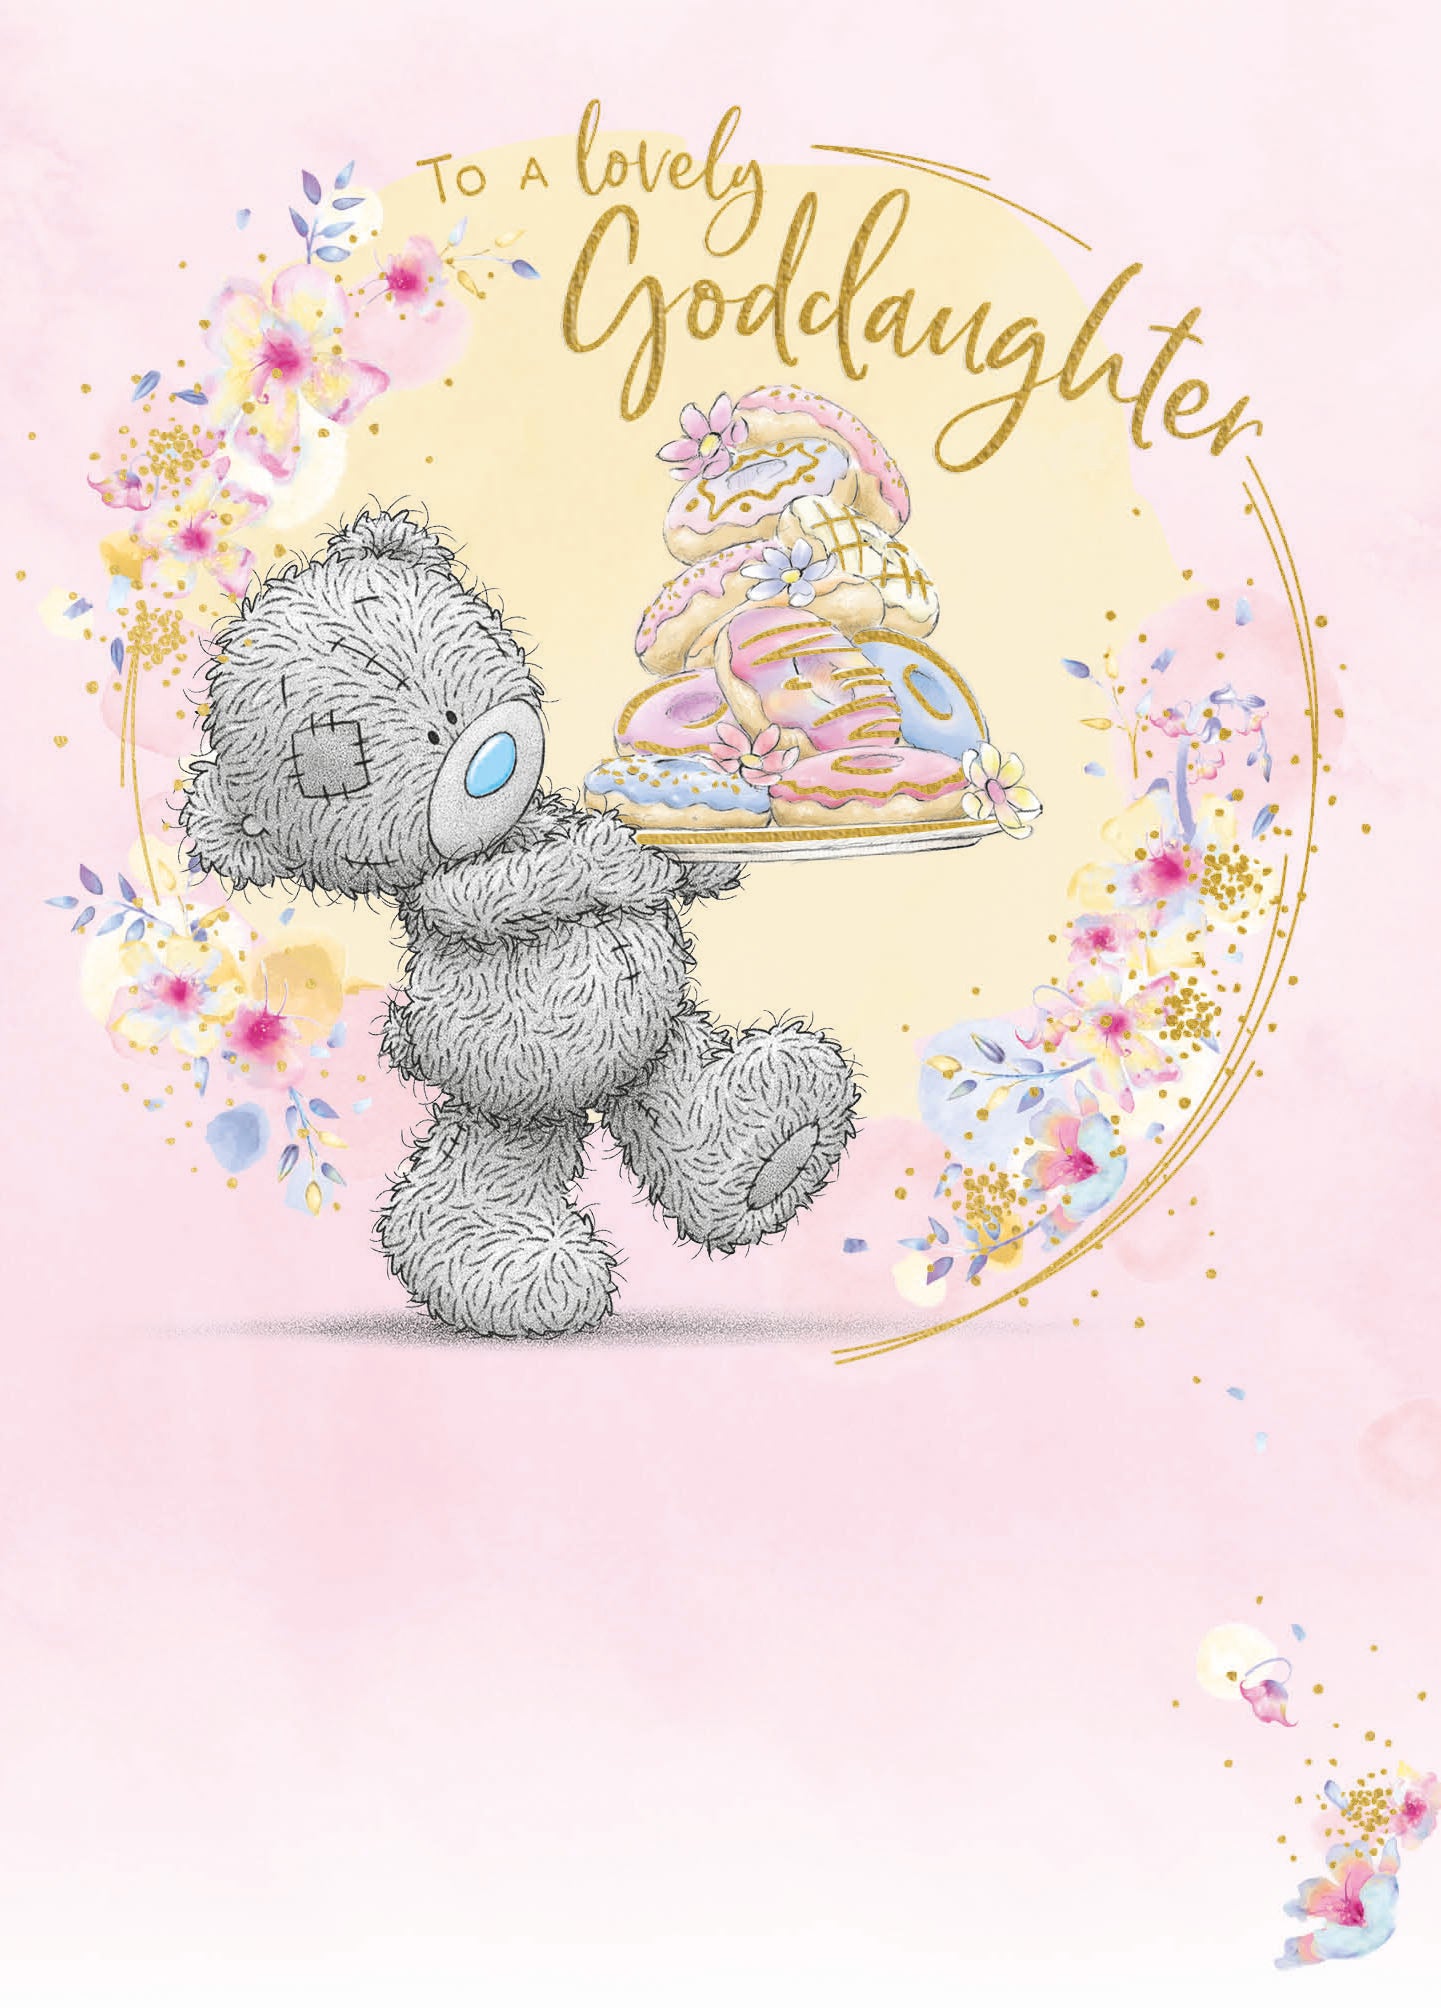 Goddaughter Birthday Card - Bear Holding Dish Of Doughnuts